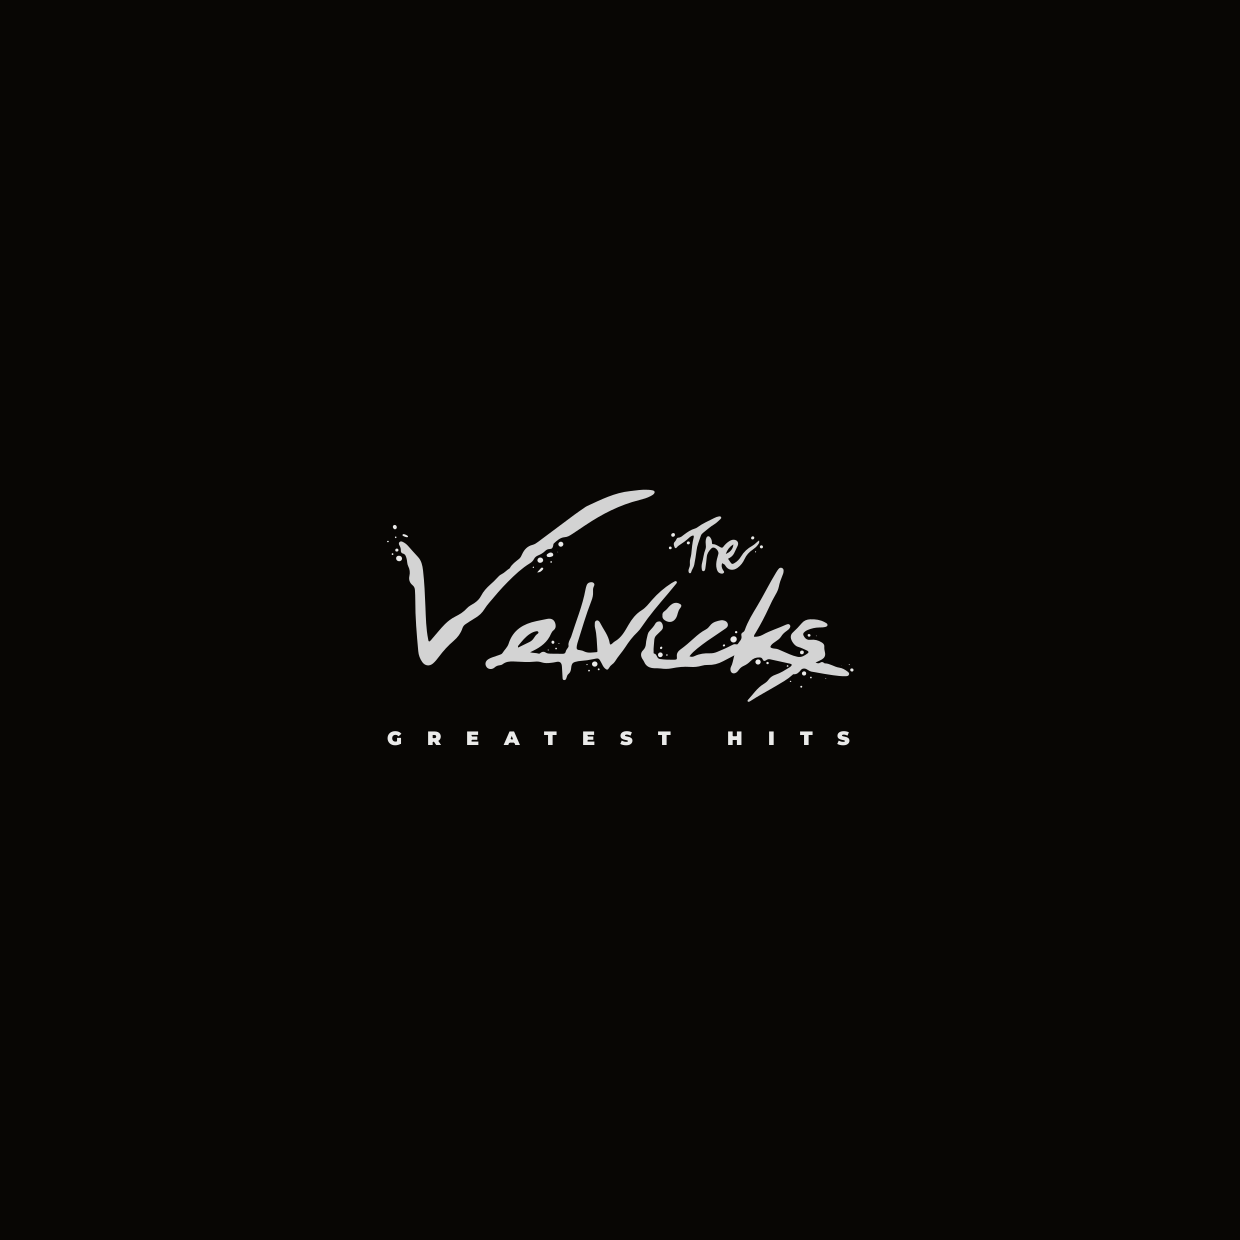 Greatest Hits by The Velvicks (Vinyl)